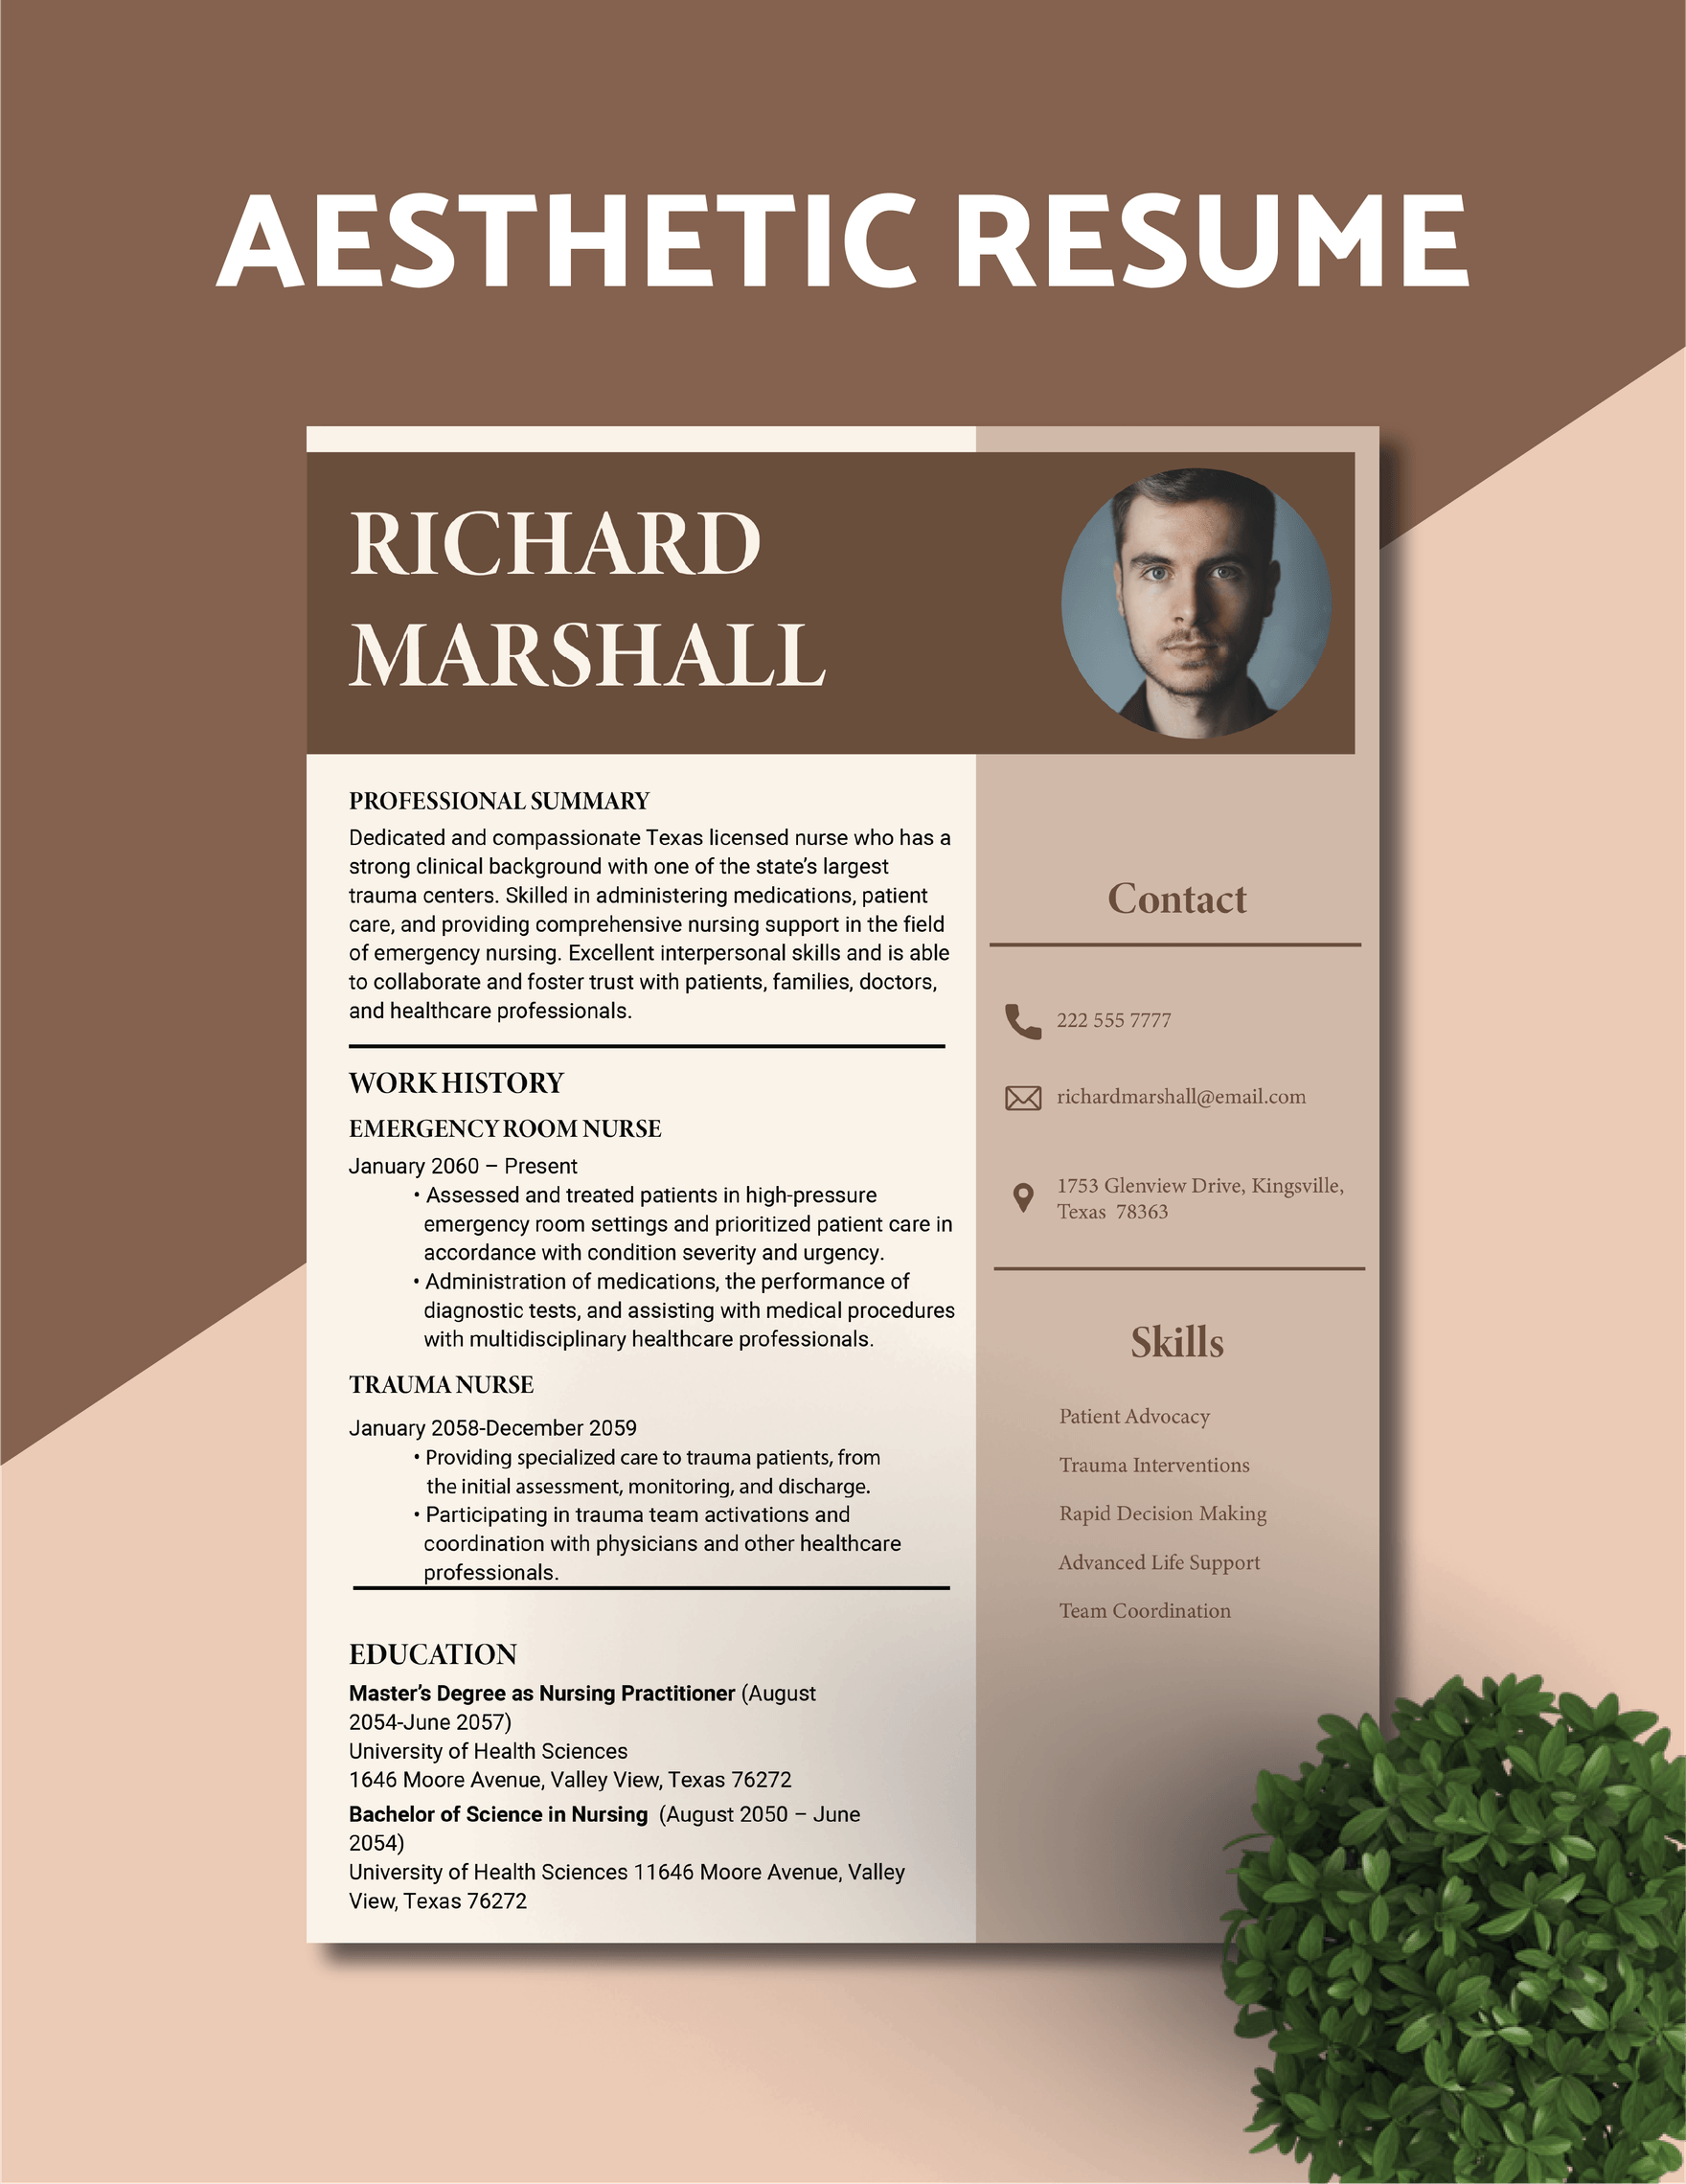 Aesthetic Resume Template